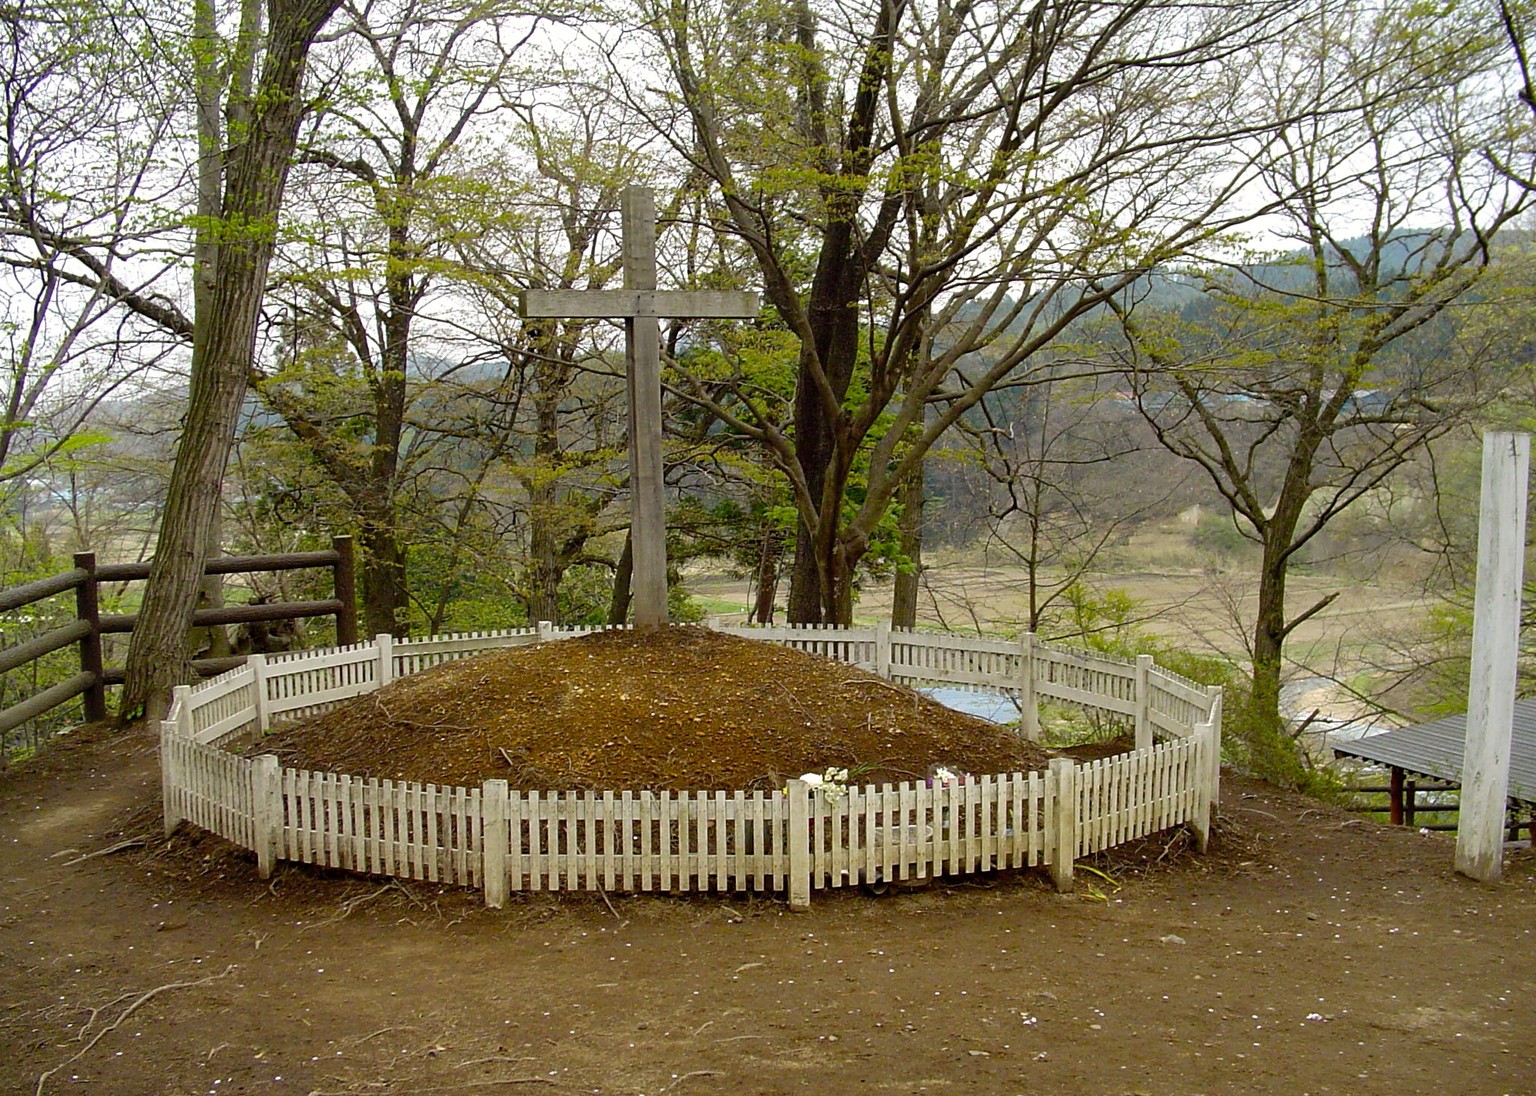 tomb of christ grave of christ jesus christus grab shingo japan https://en.wikipedia.org/wiki/Shing%C5%8D,_Aomori#/media/File:Jesus%5E%5E39,_Tomb_-_panoramio.jpg